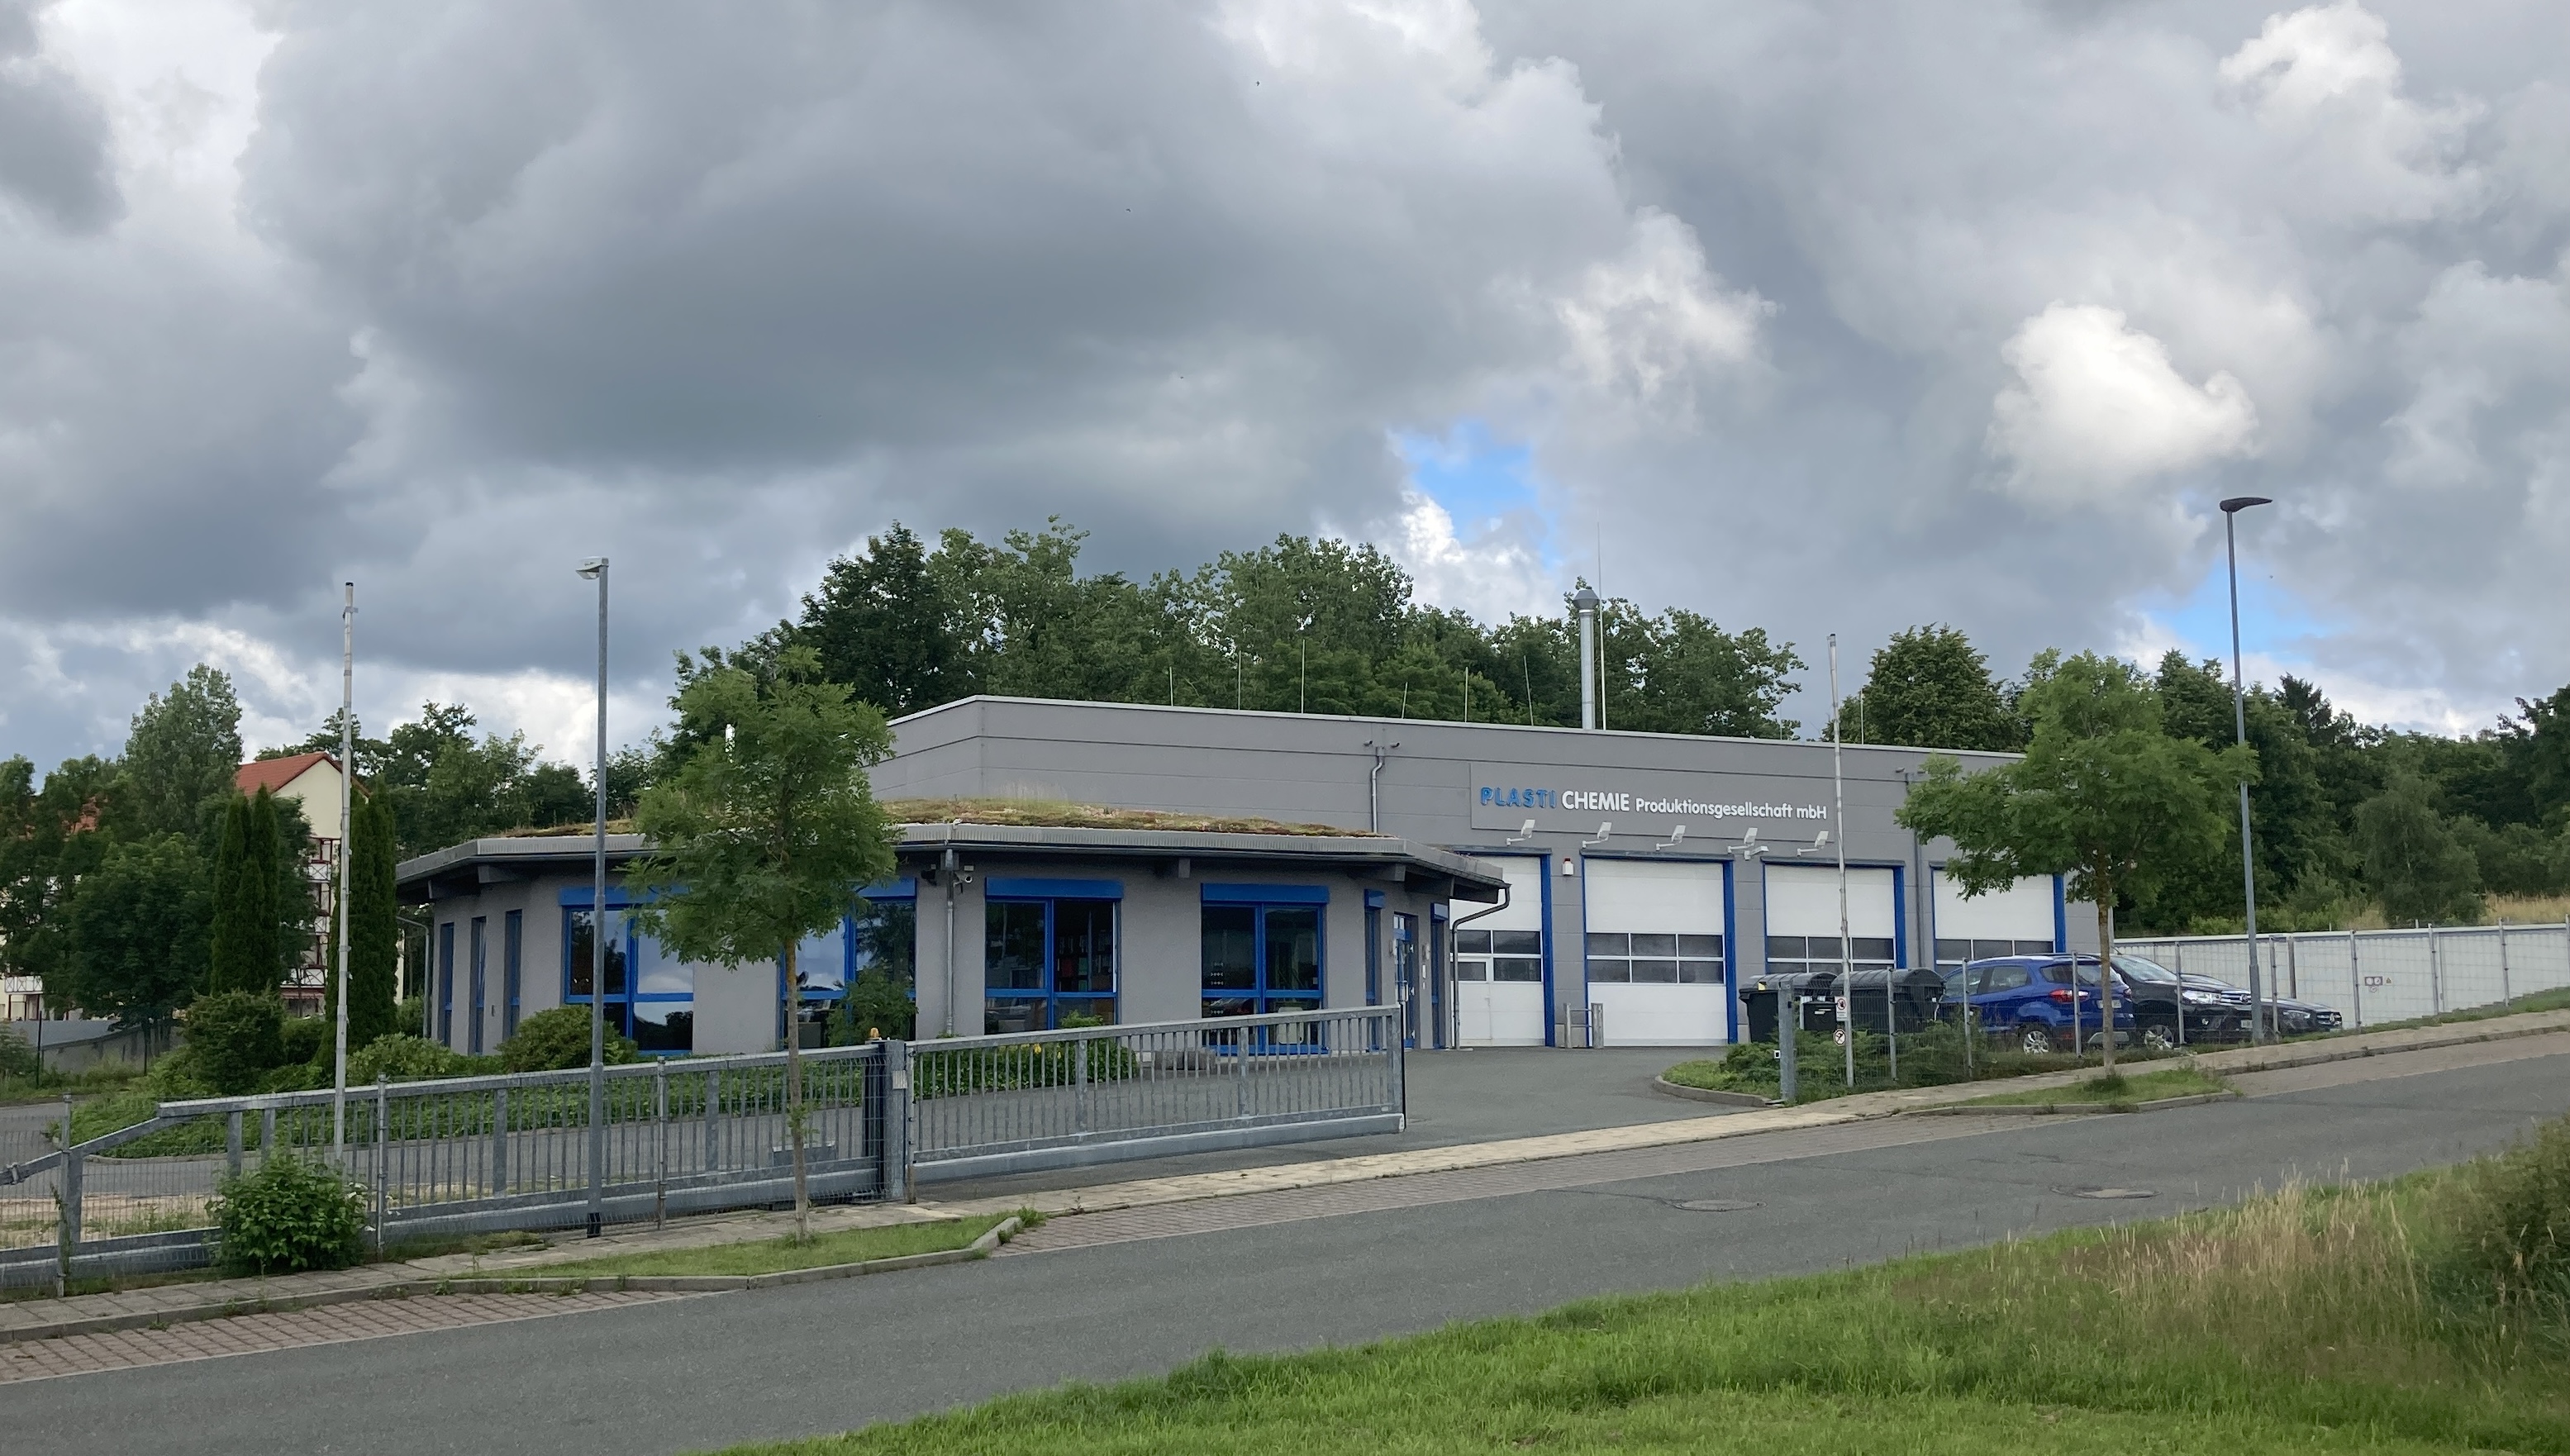 Bild 2 Plasti-Chemie Produktionsgesellschaft mbH in Falkenstein/Vogtl.